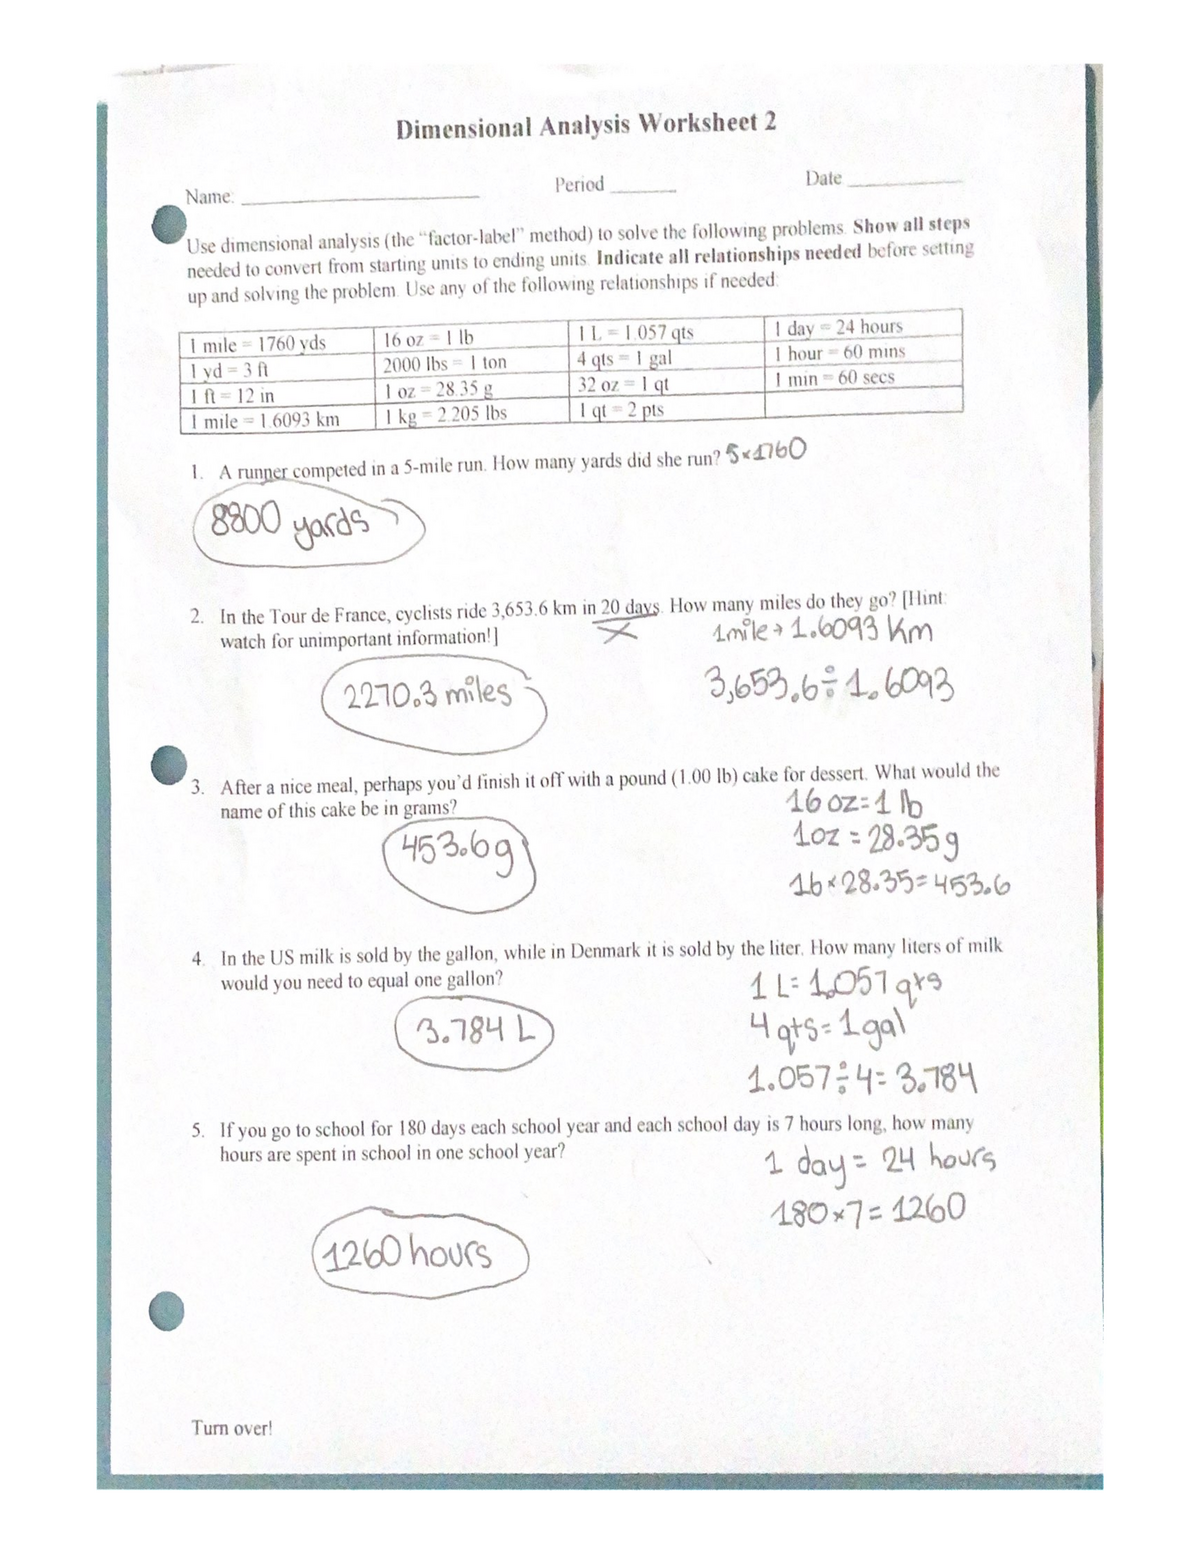 Dimensional Analysis Worksheet 11 practice material - Life 11001 Regarding Dimensional Analysis Worksheet 2